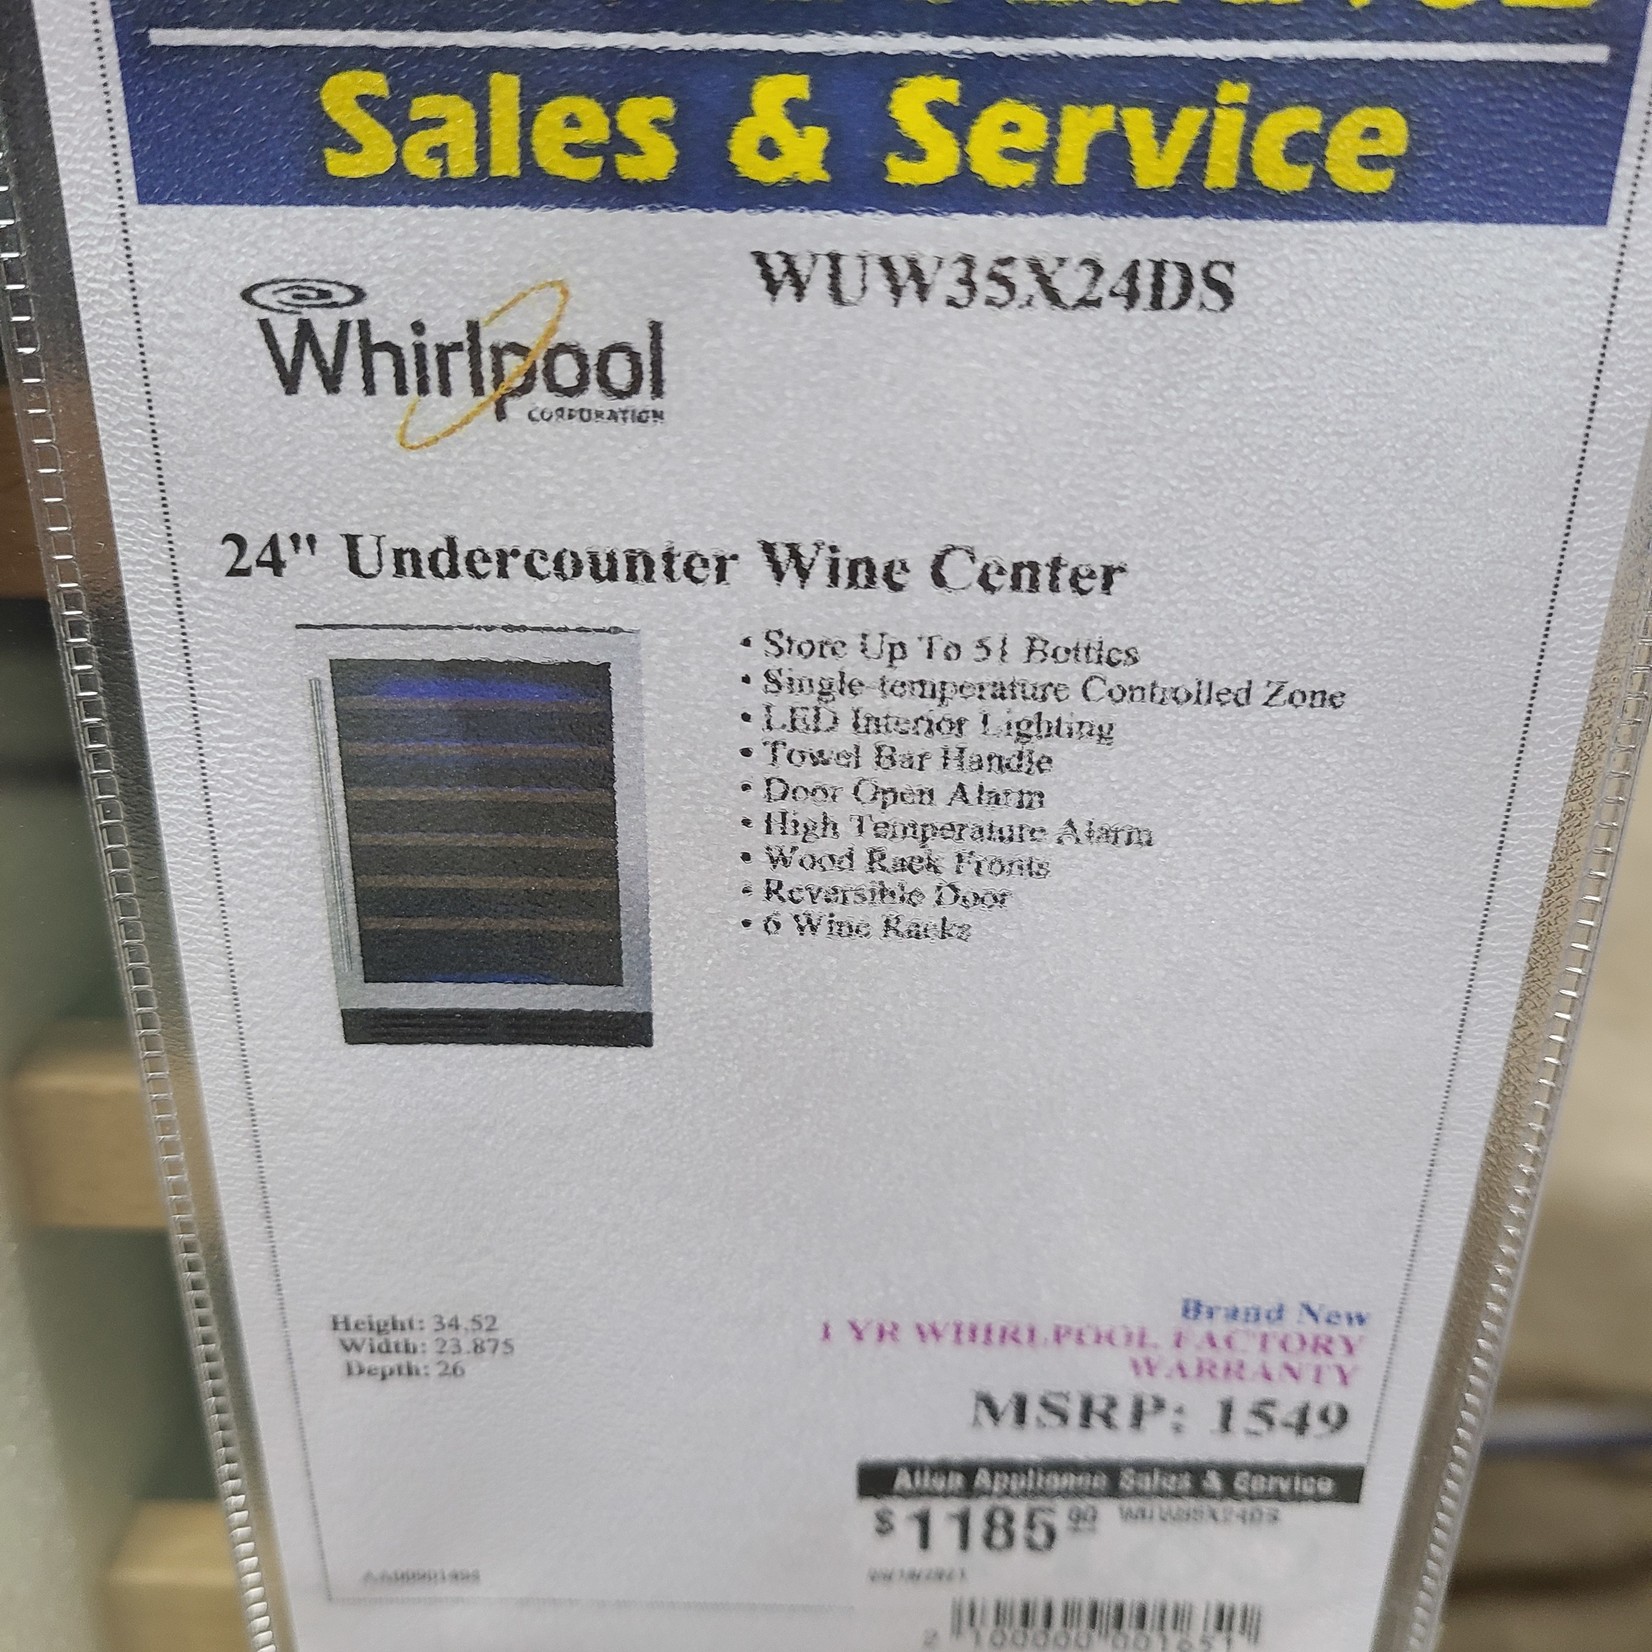 Whirlpool Whirlpool 24" Undercounter Wine Counter WUW35X24DS - AA00901494